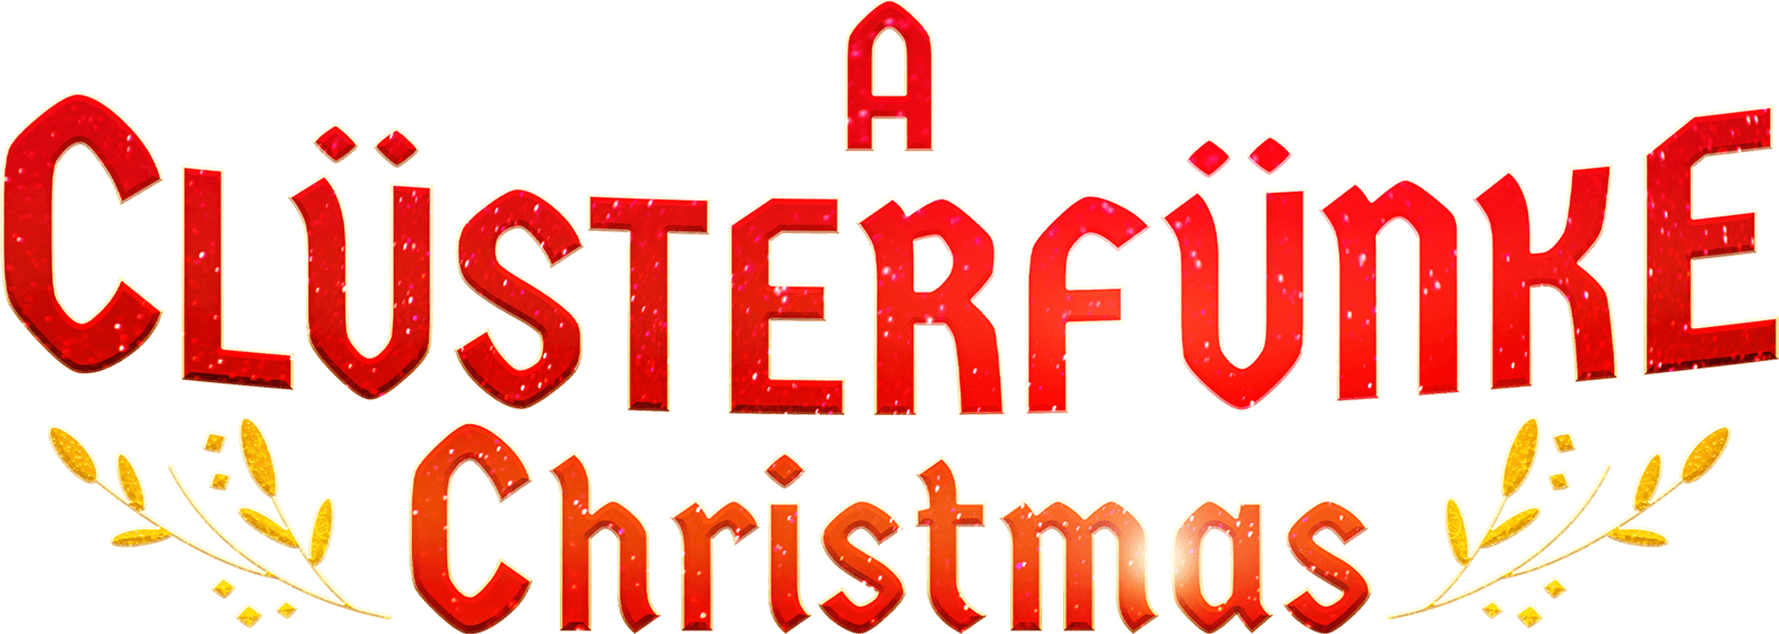 A Clüsterfünke Christmas logo